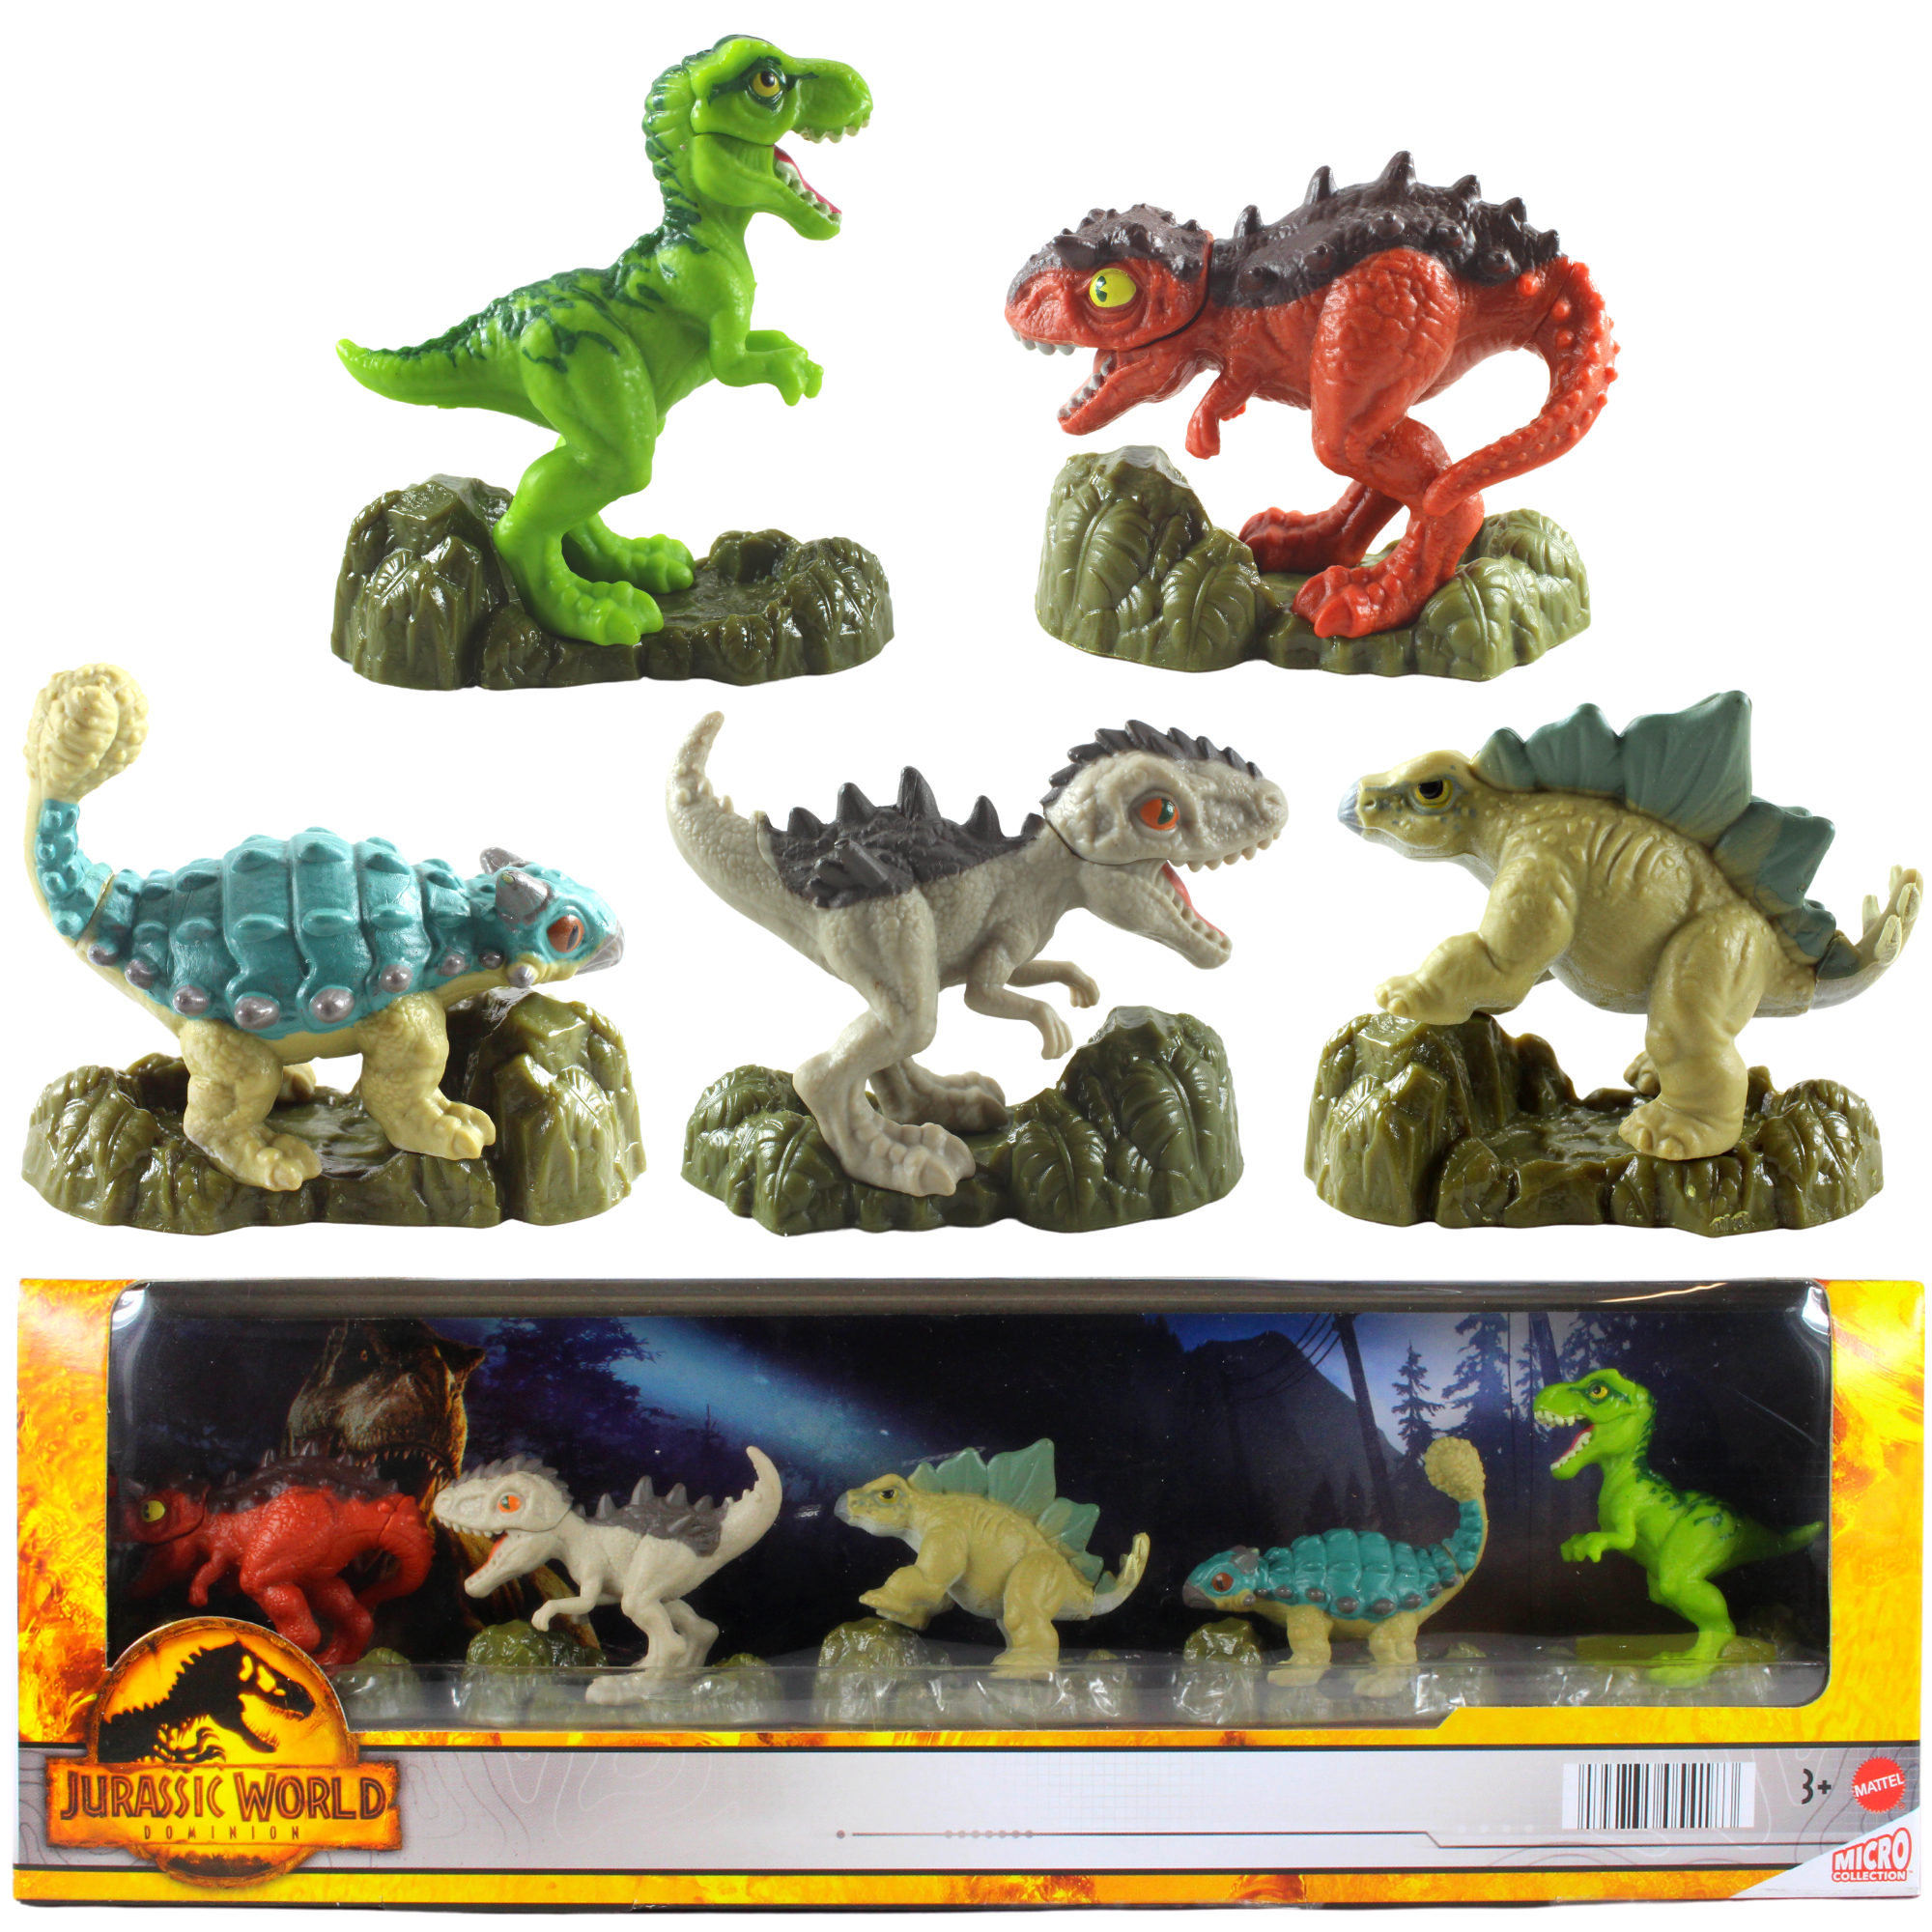 Jurassic World Dominion - Highly Detailed & Collectible 2" 5cm Dinosaur Figure Pack of 5 - Tyrannosaurus Rex, Carnotaurus, Indominous Rex, Stegosaurus & Ankylosaurus - Toptoys2u